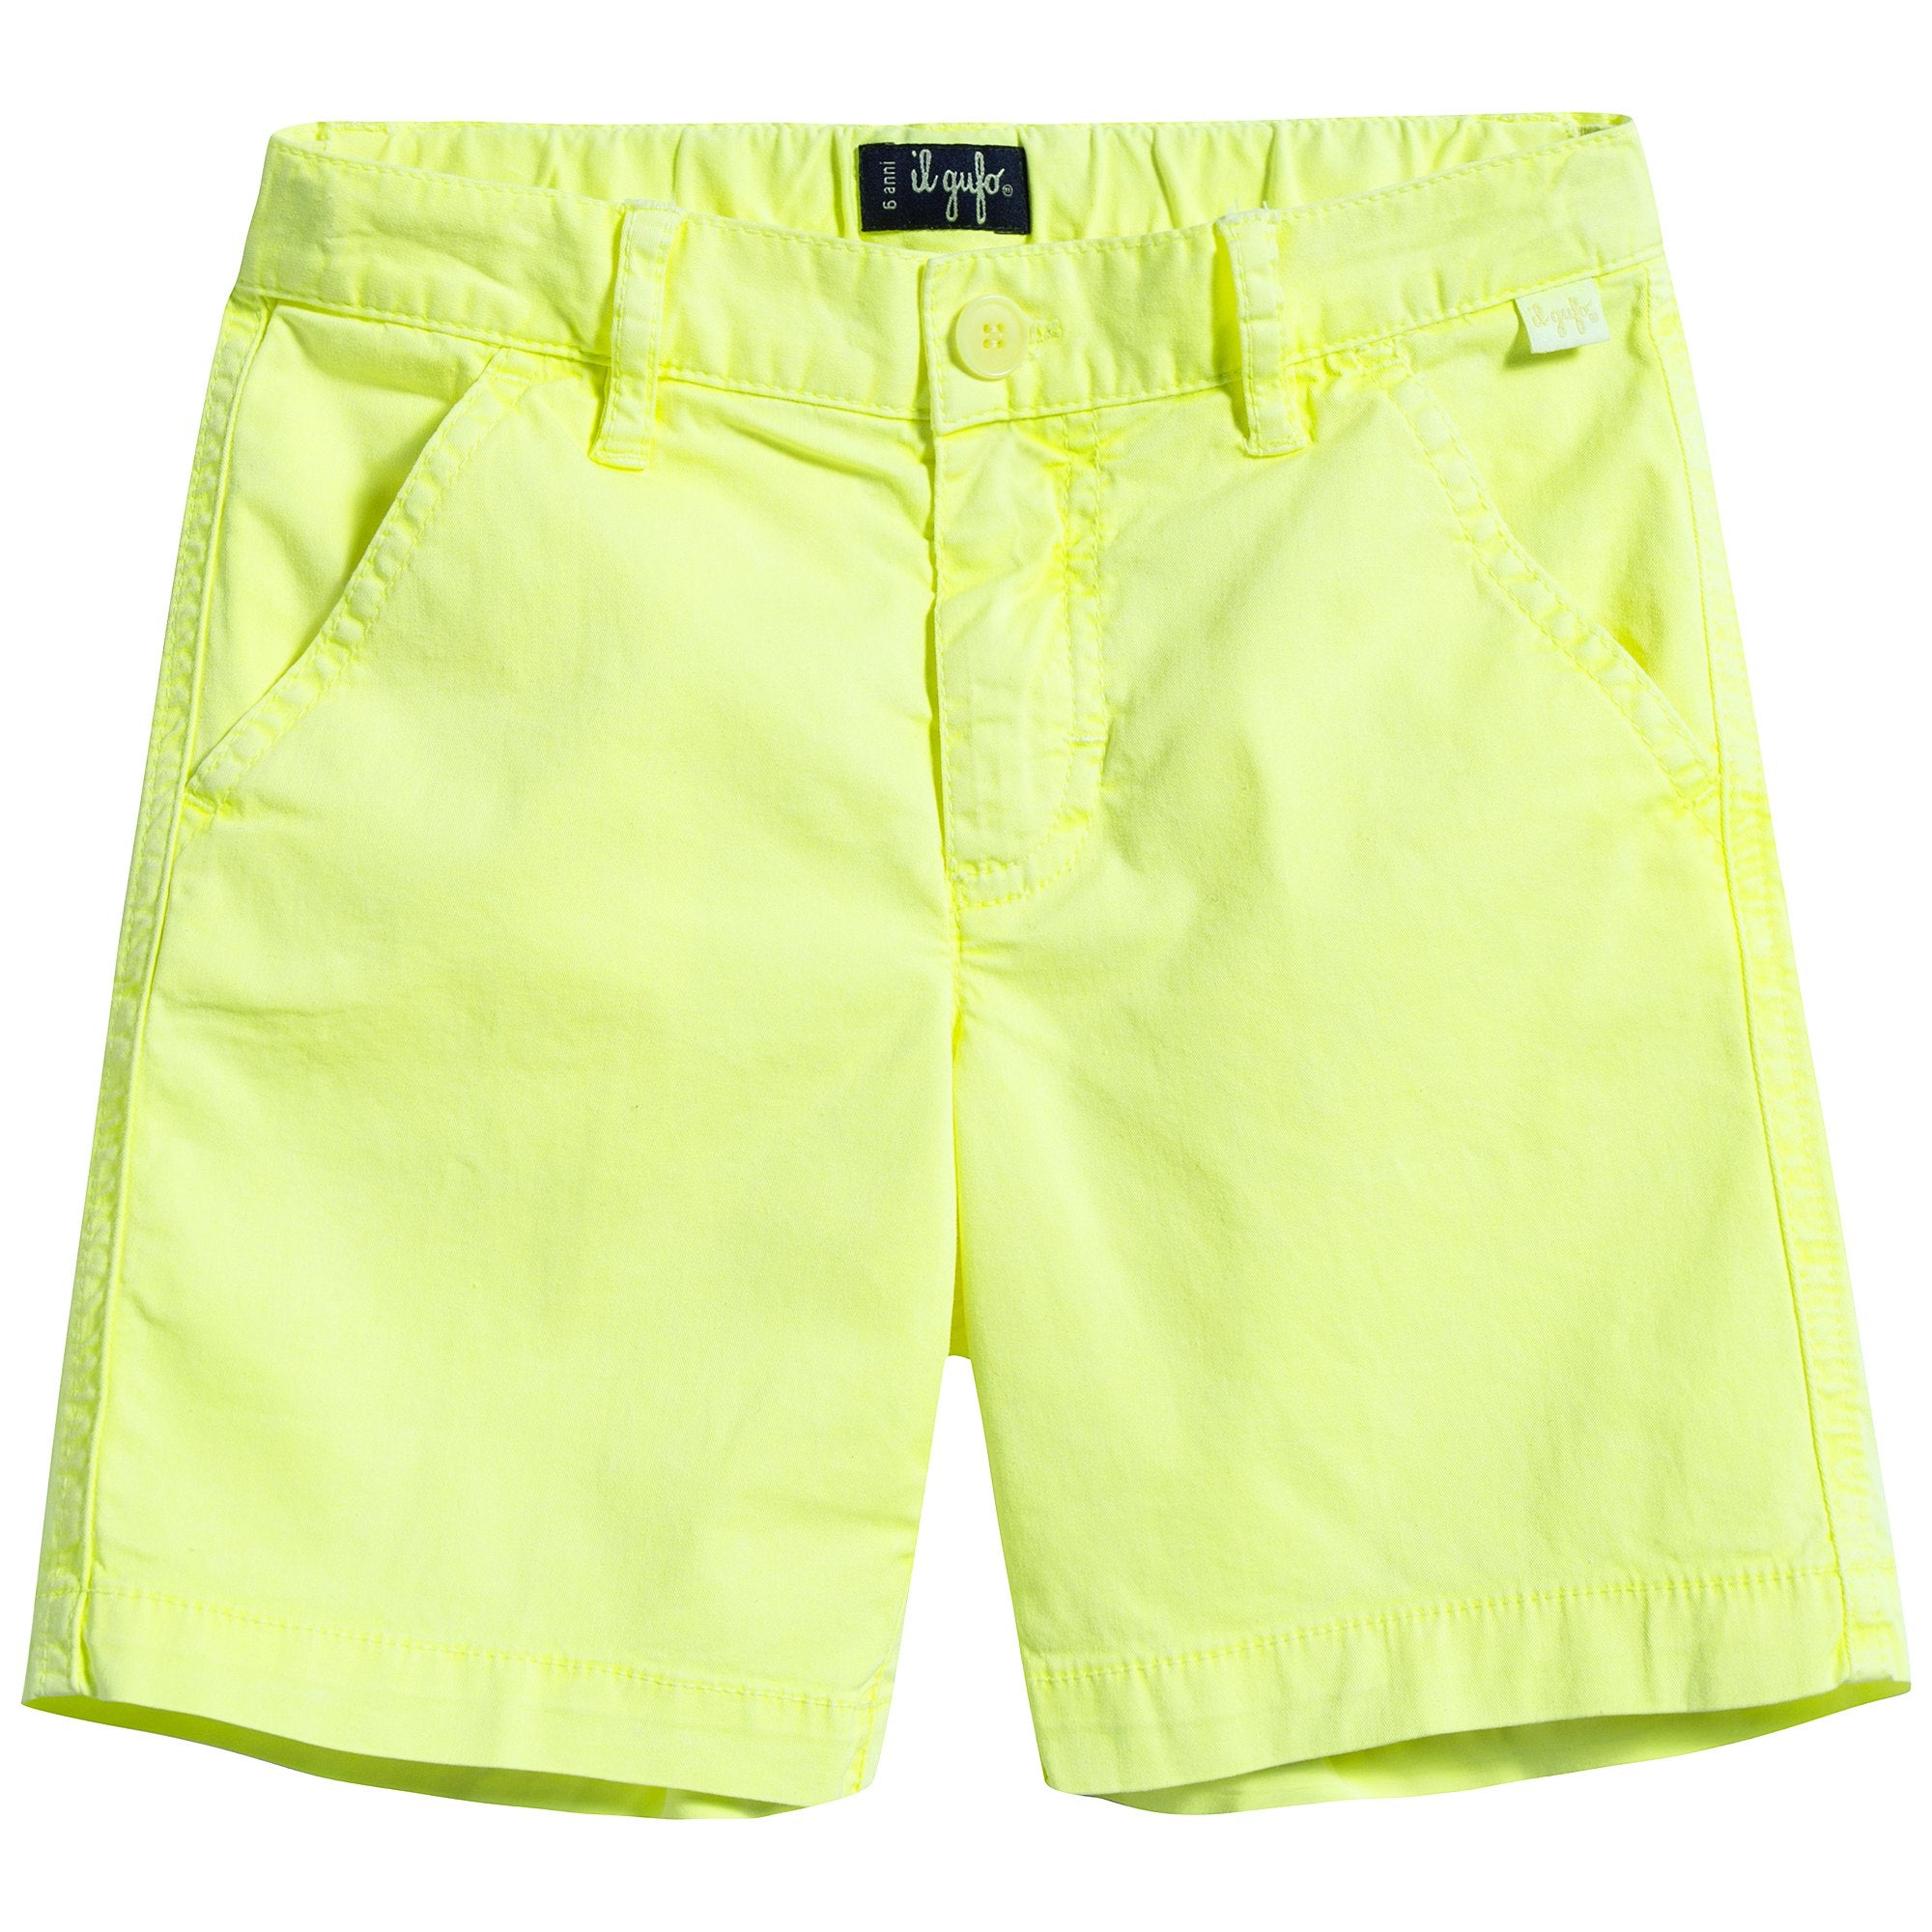 Boys Light Yellow Cotton Shorts